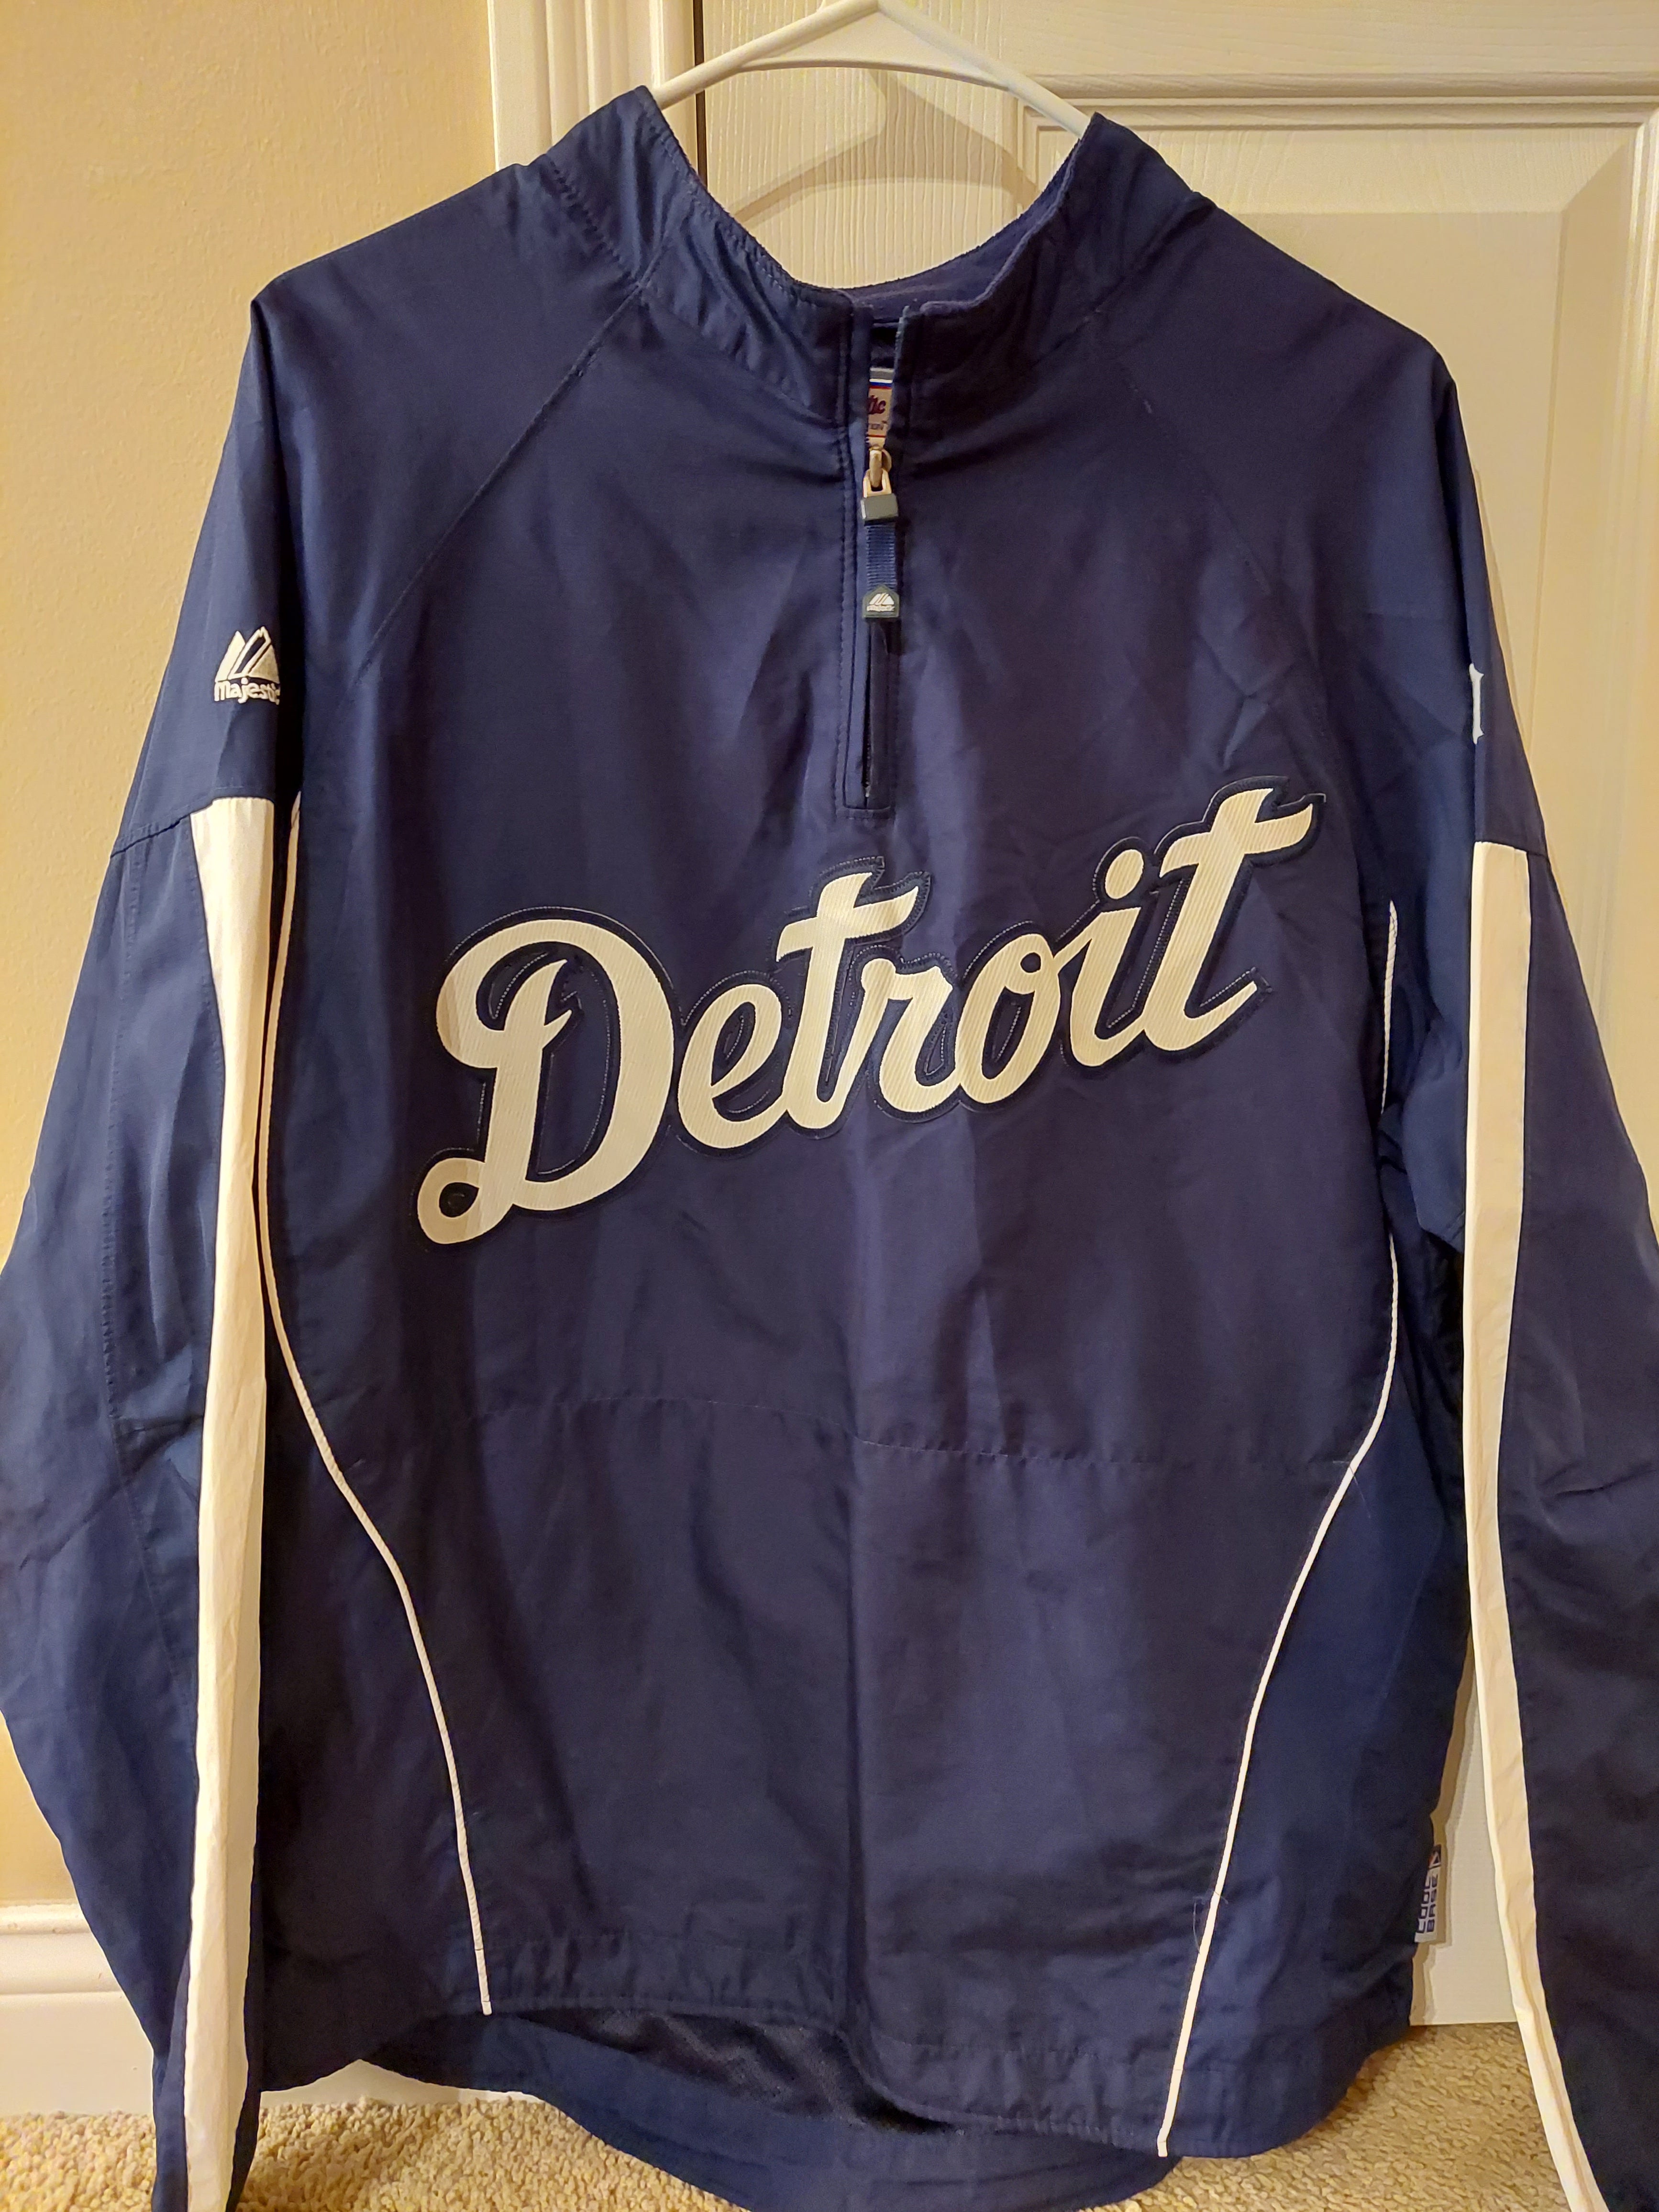 Mens Medium Detroit Tigers Majestic Jacket